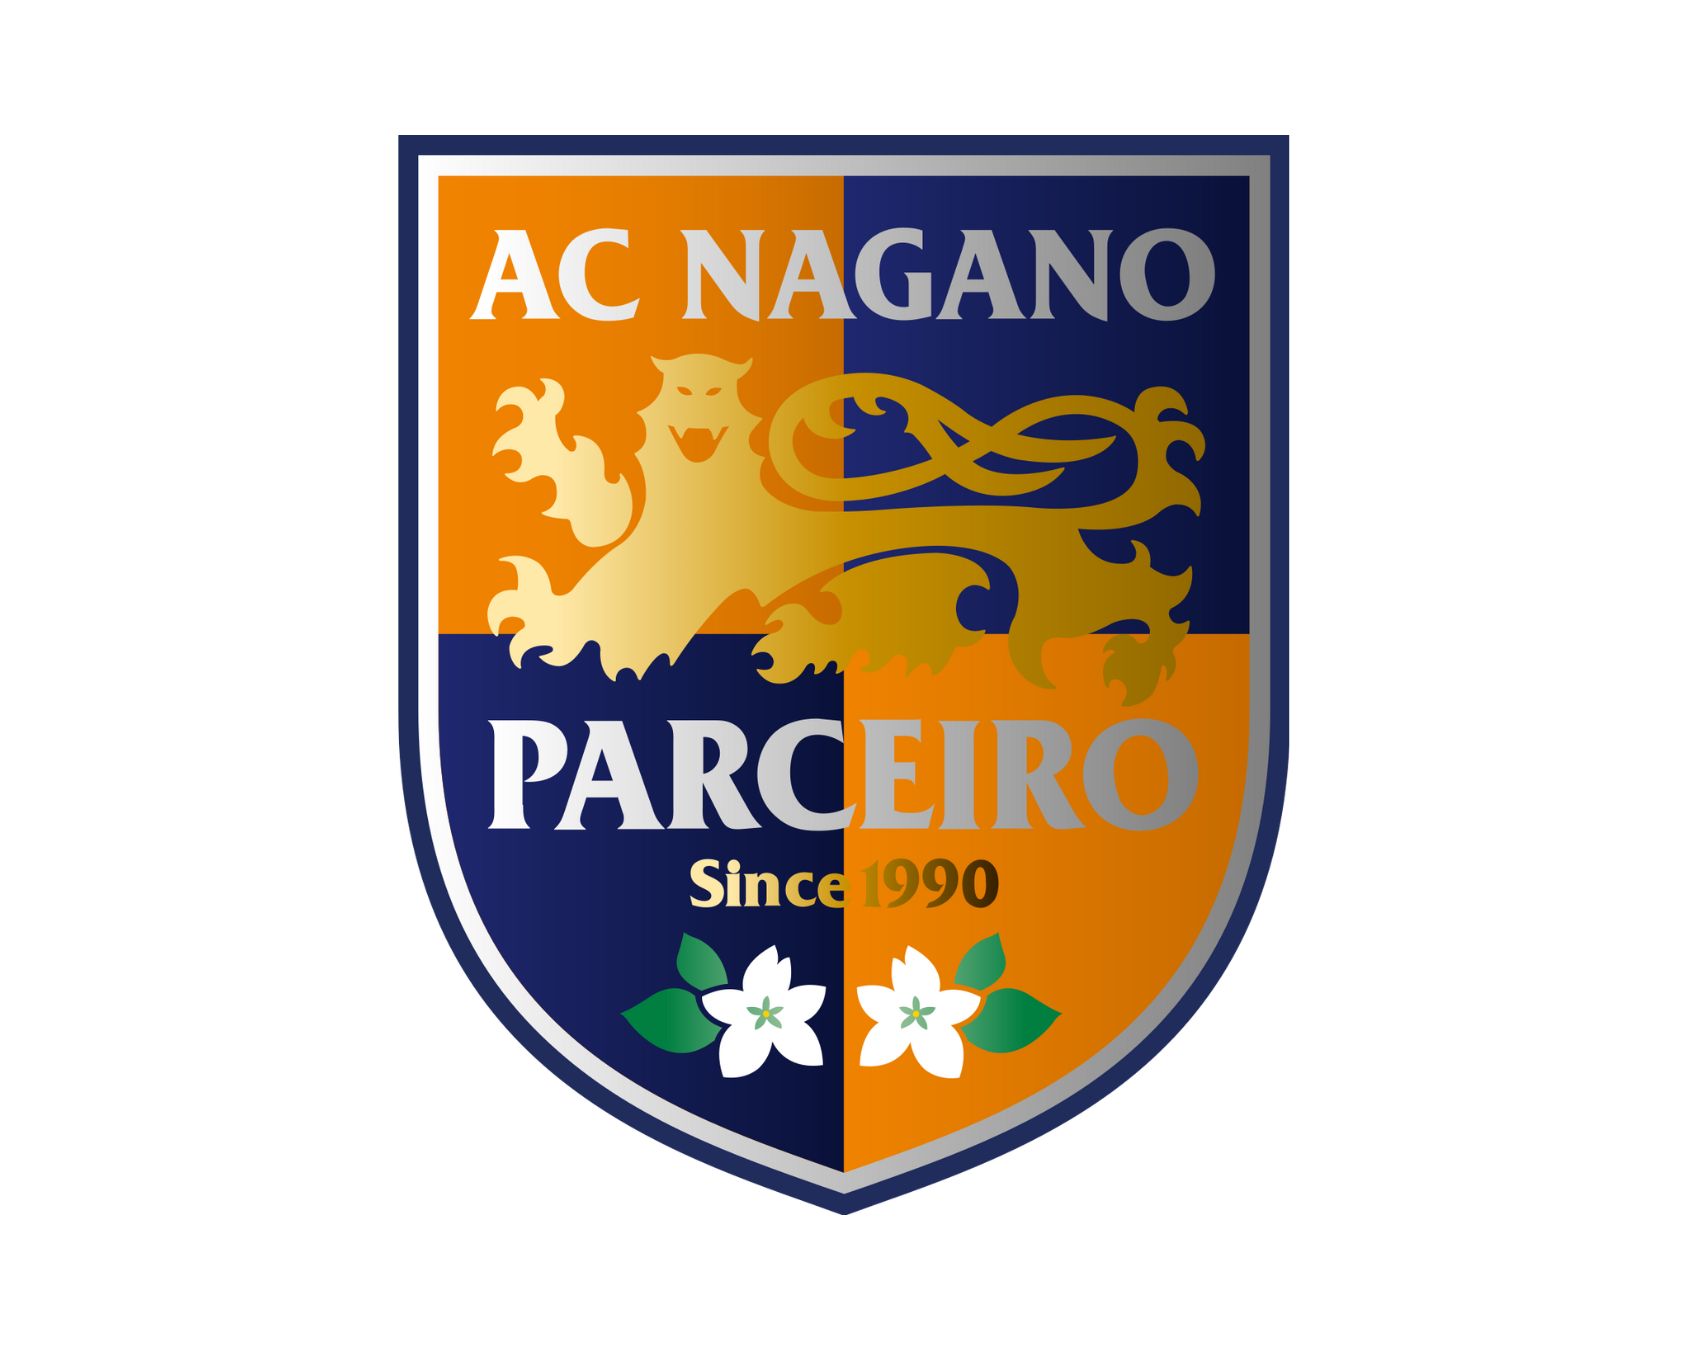 ac-nagano-parceiro-ladies-25-football-club-facts